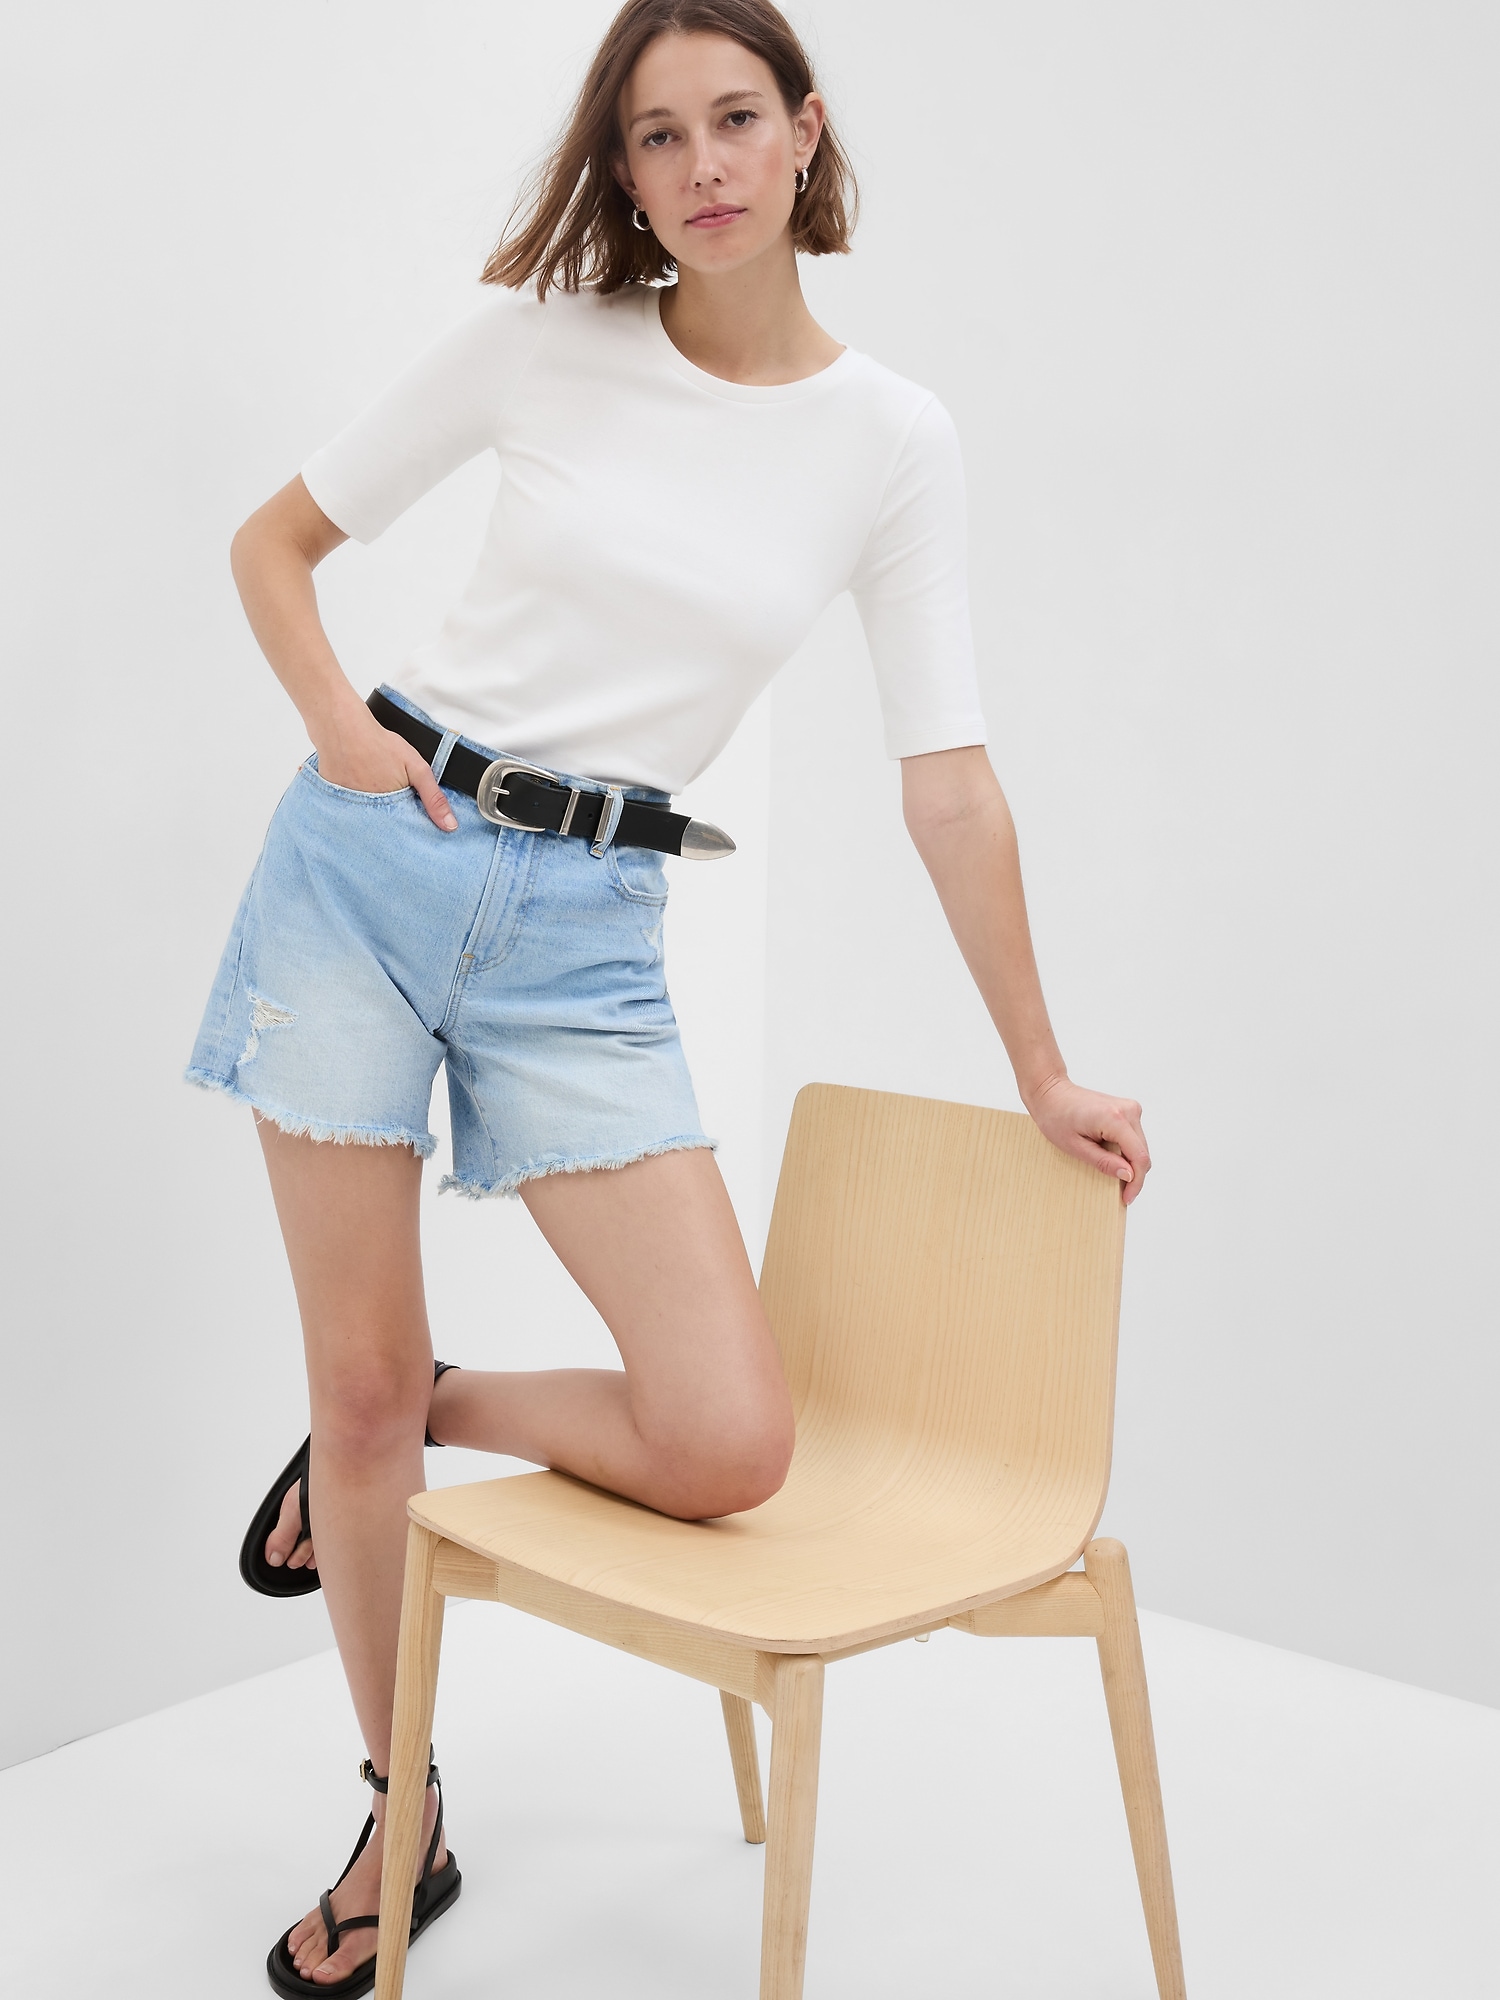 Zara Women's denim Shorts size 0 black color High-waisted Distressed